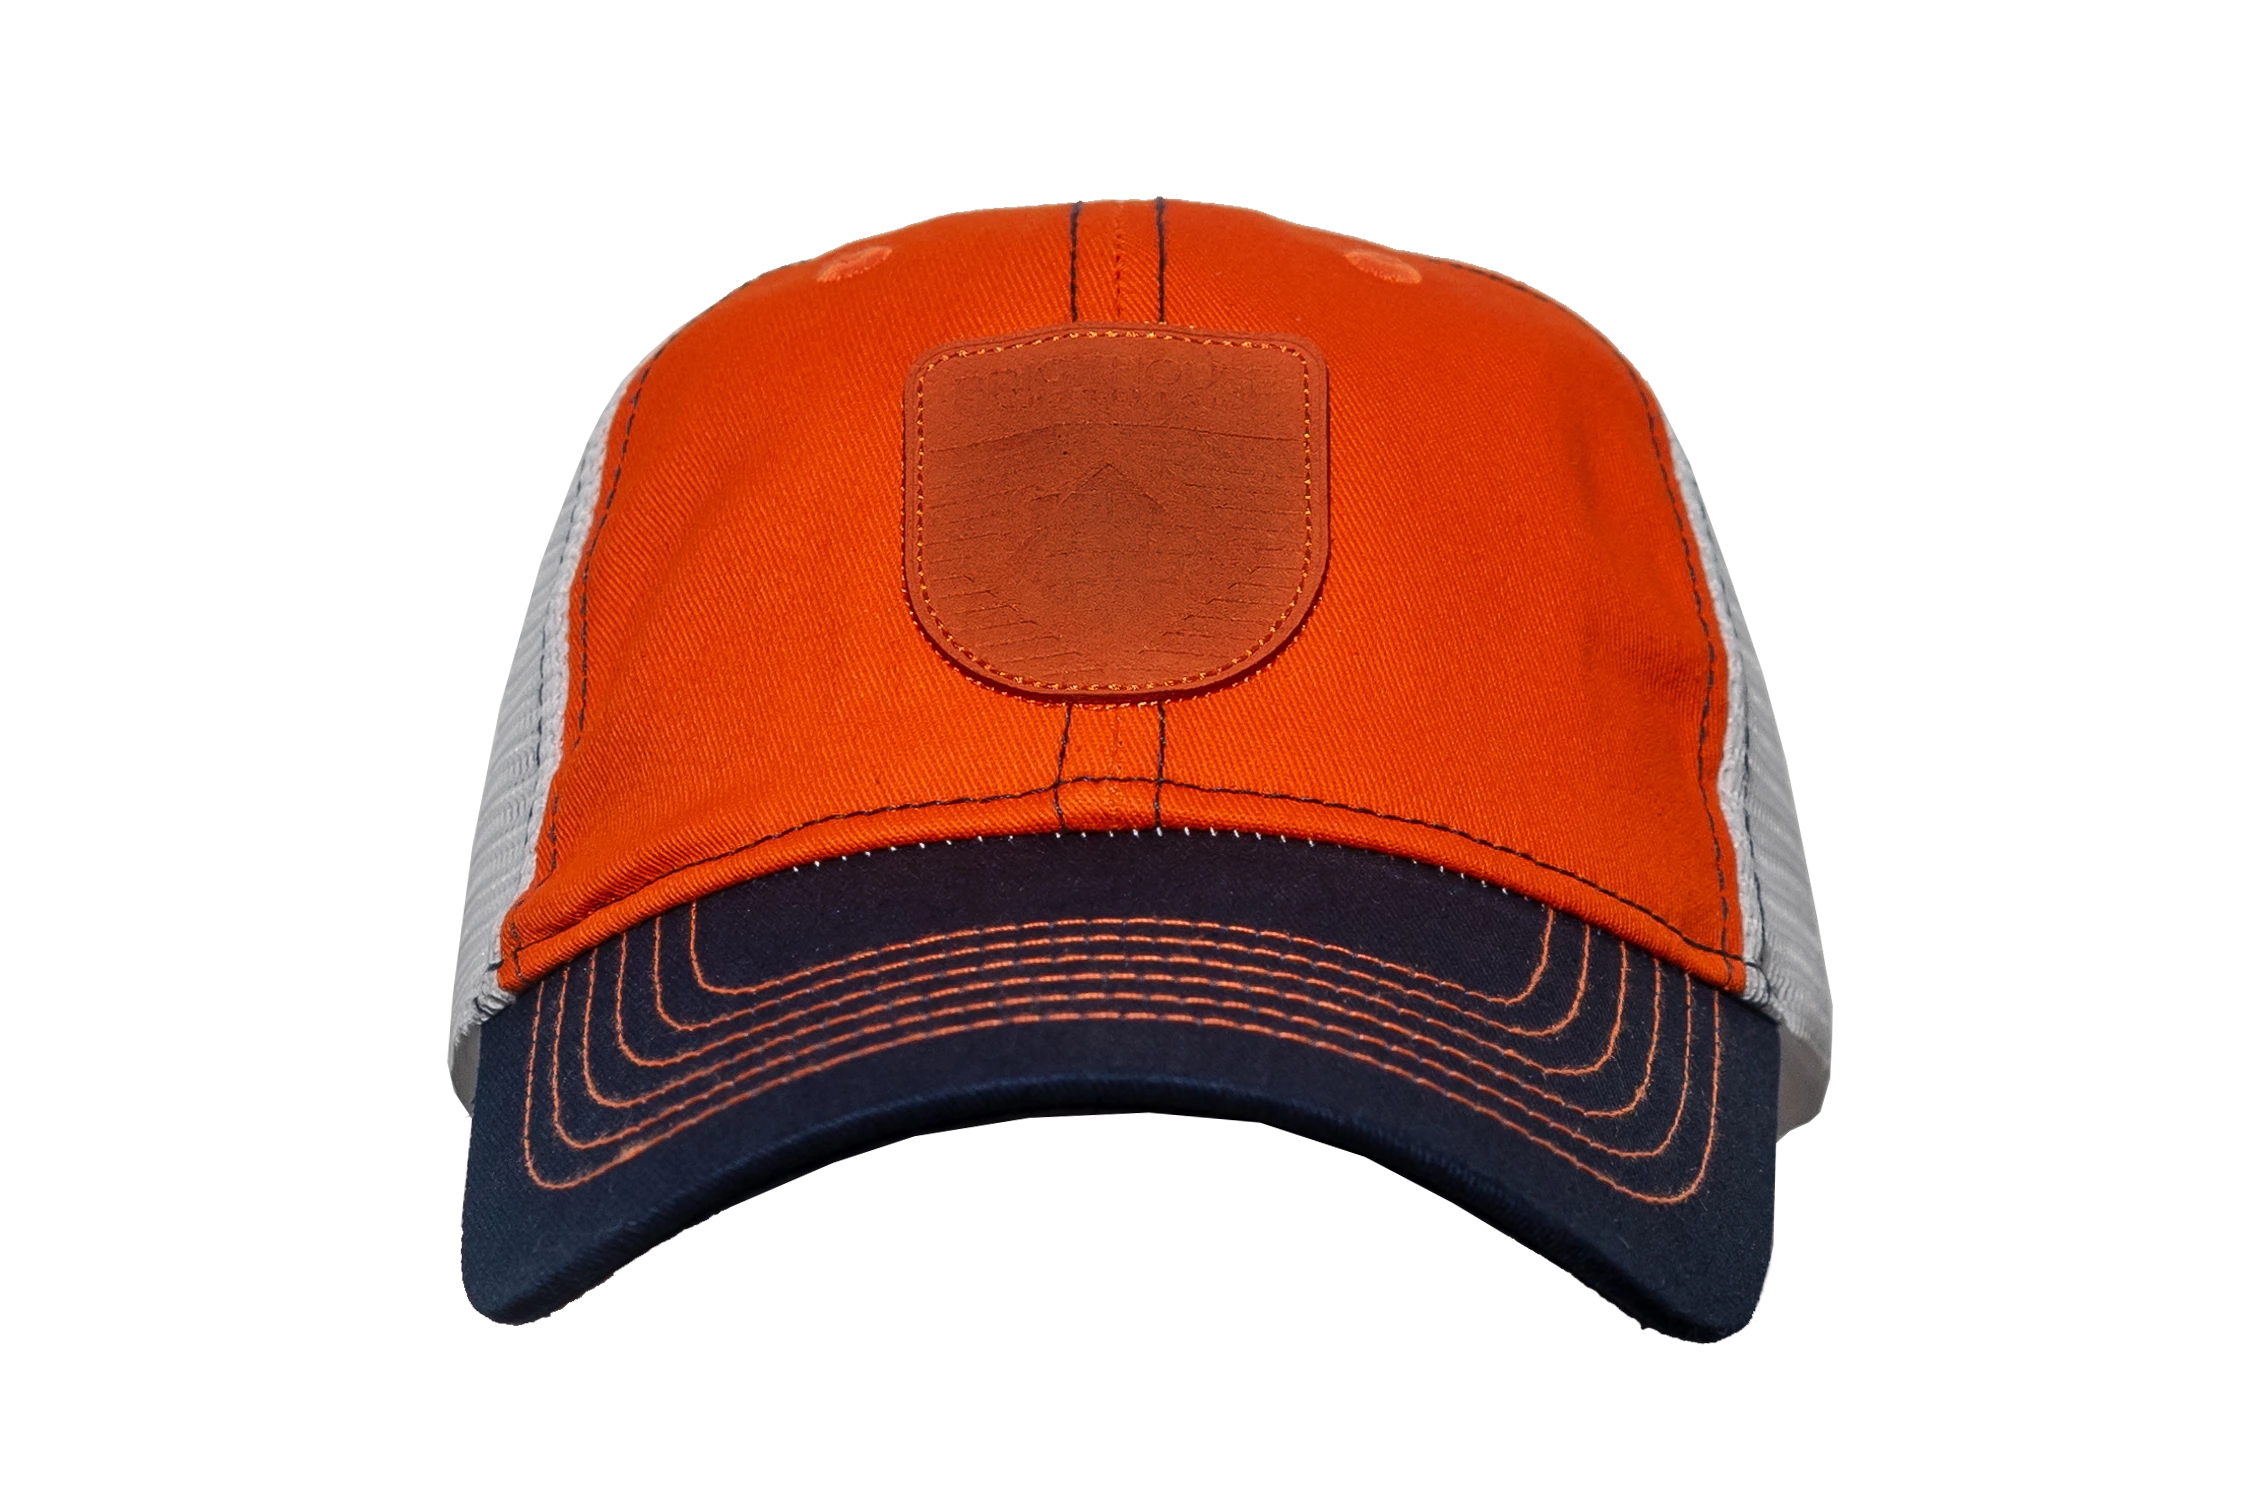 Brickhouse nutrition trucker hat leather badge orange front